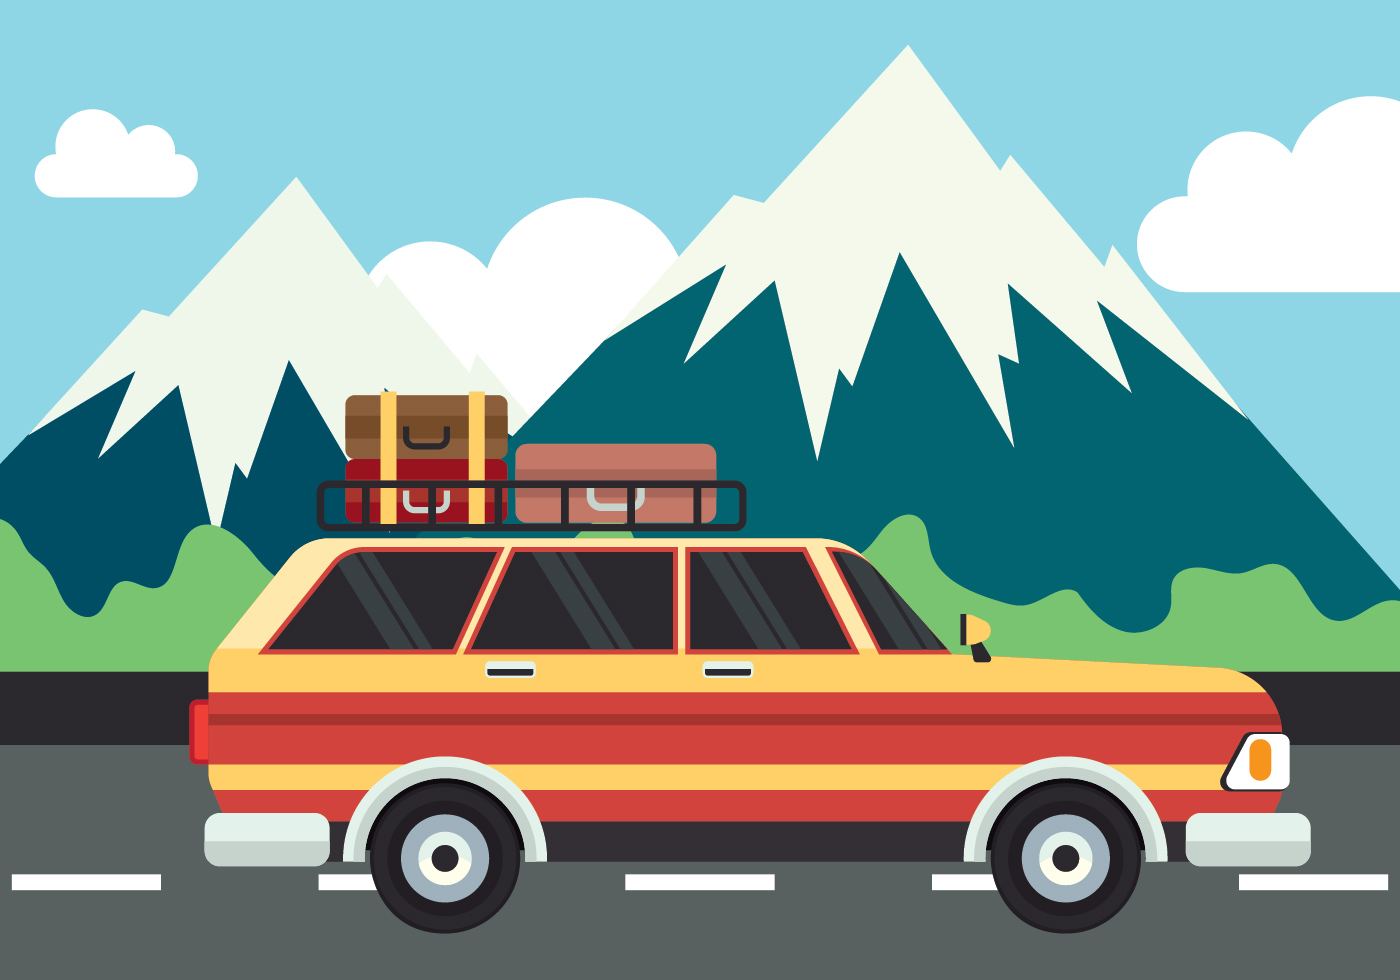 station wagon on a road trip